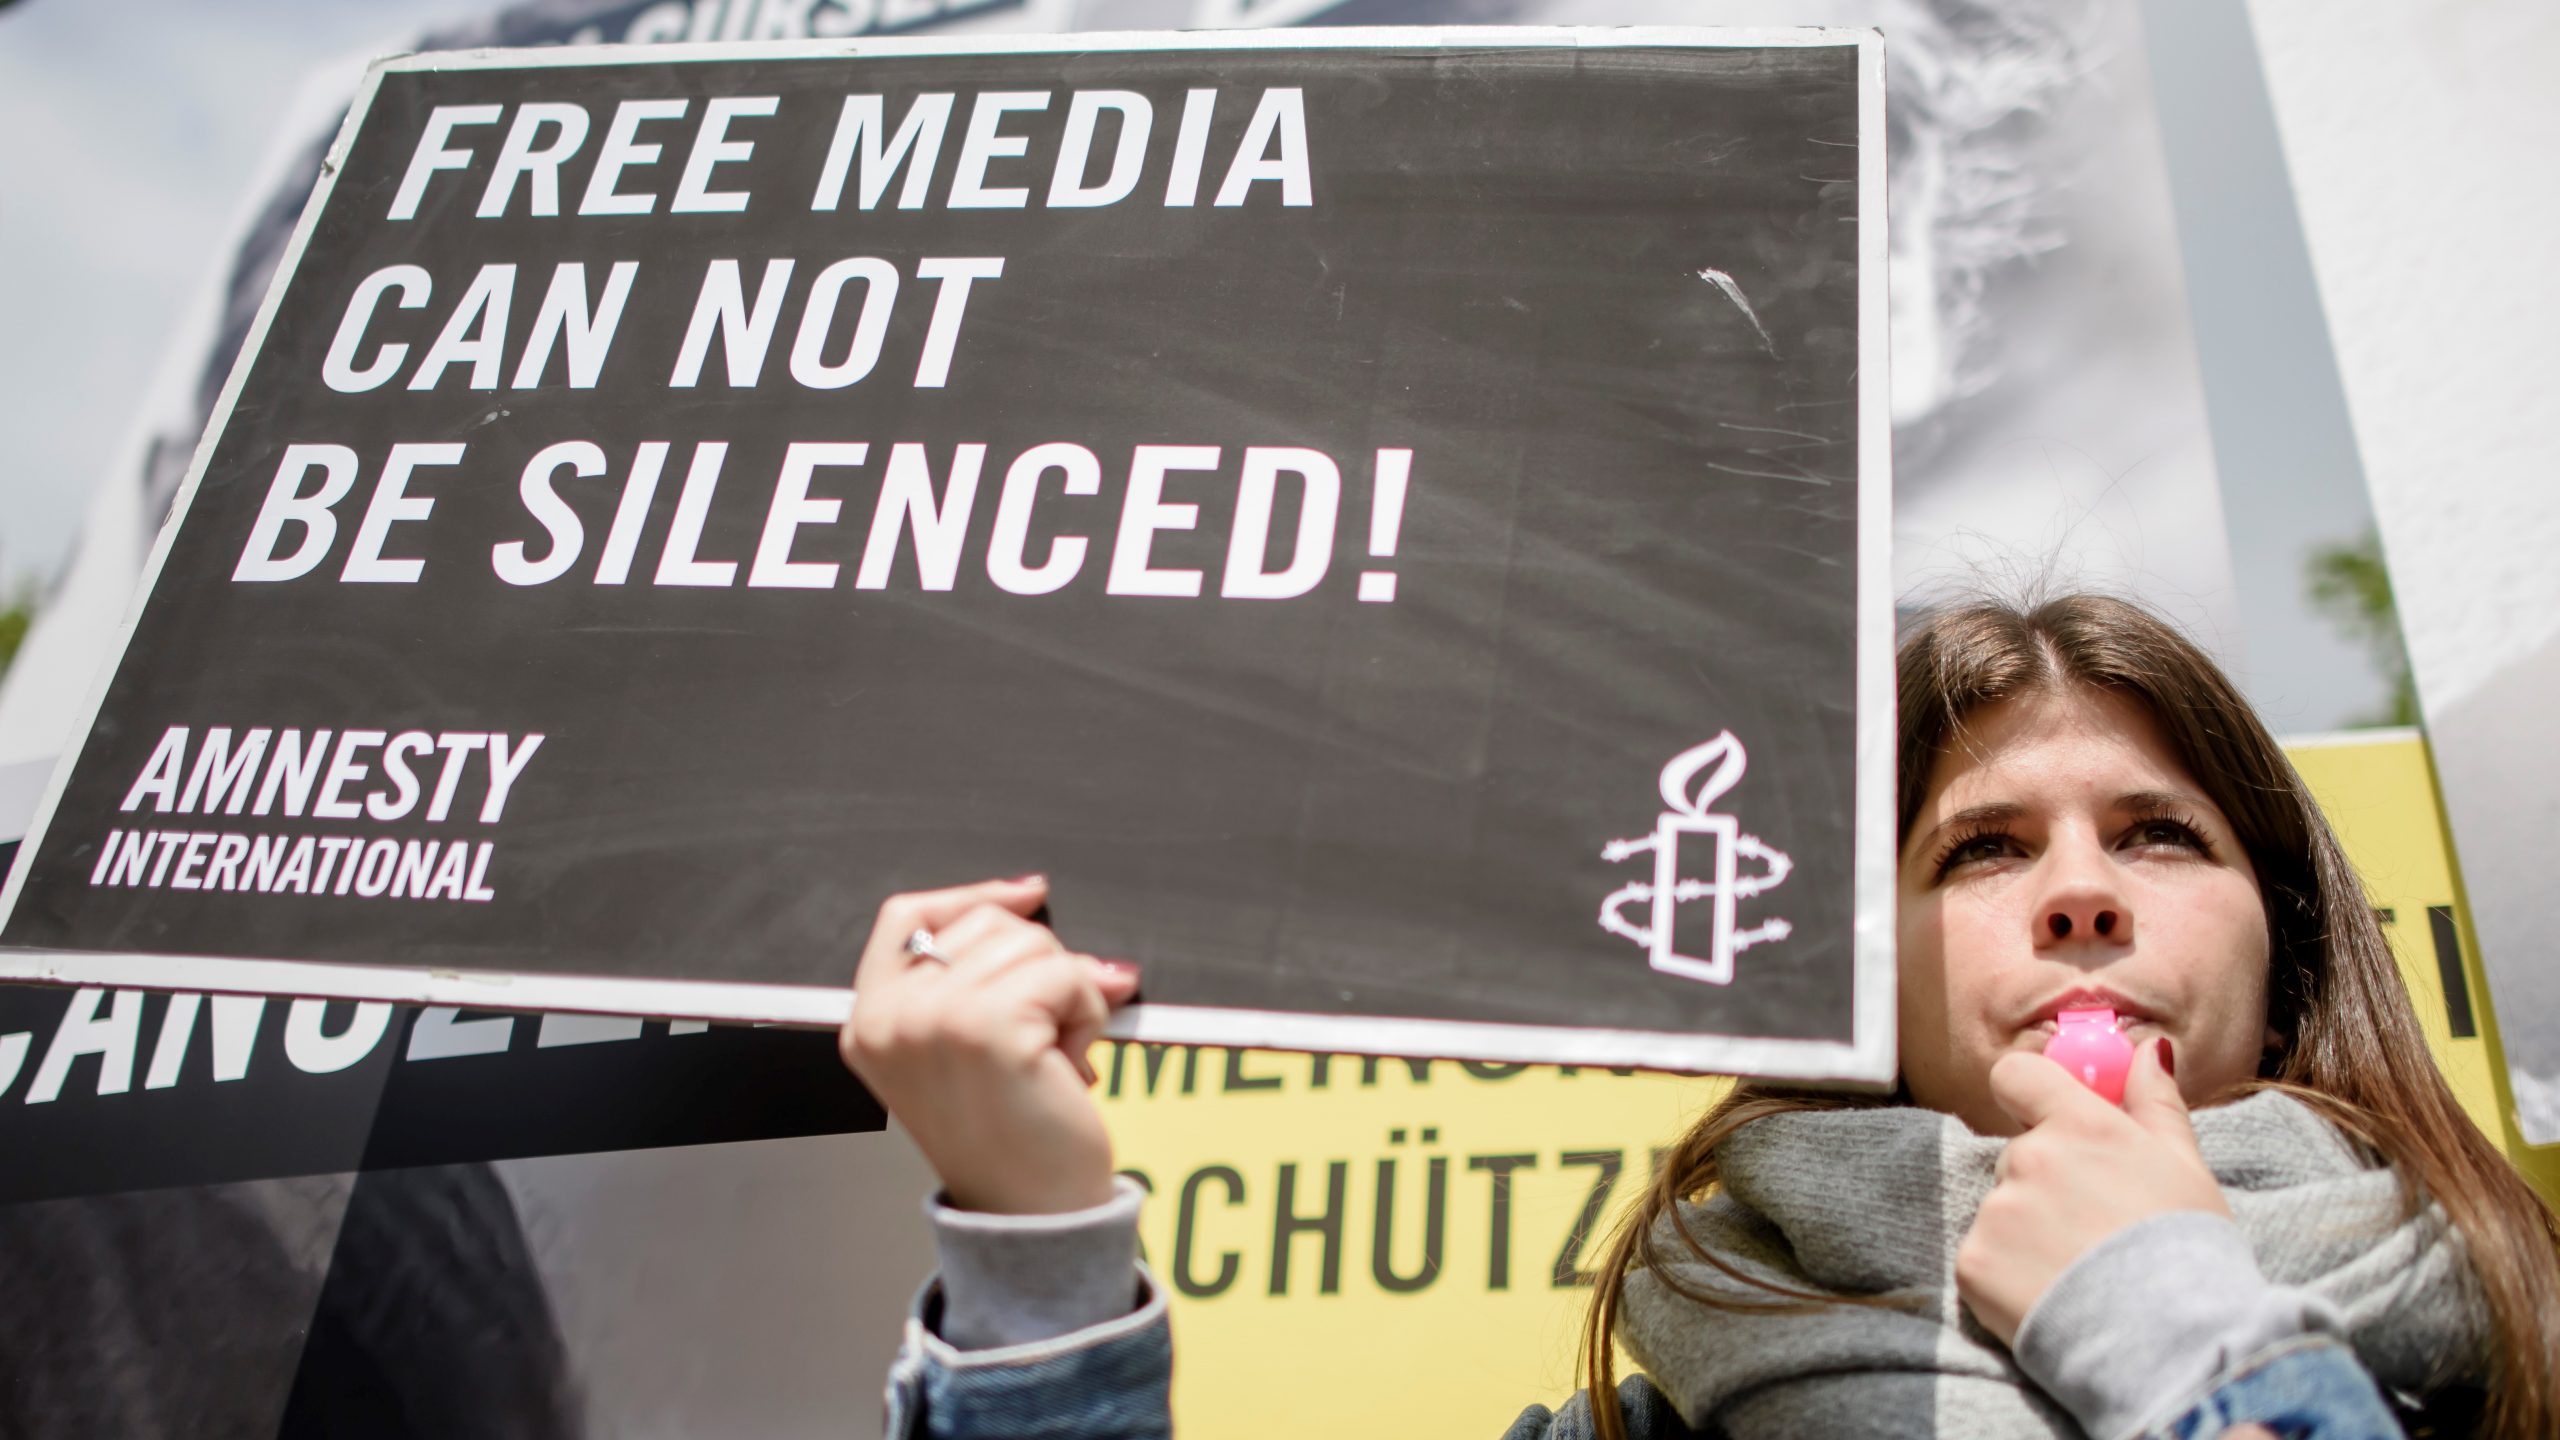 Turkey’s ‘Disinformation’ Law Will Devastate Media Freedom, Experts Predict